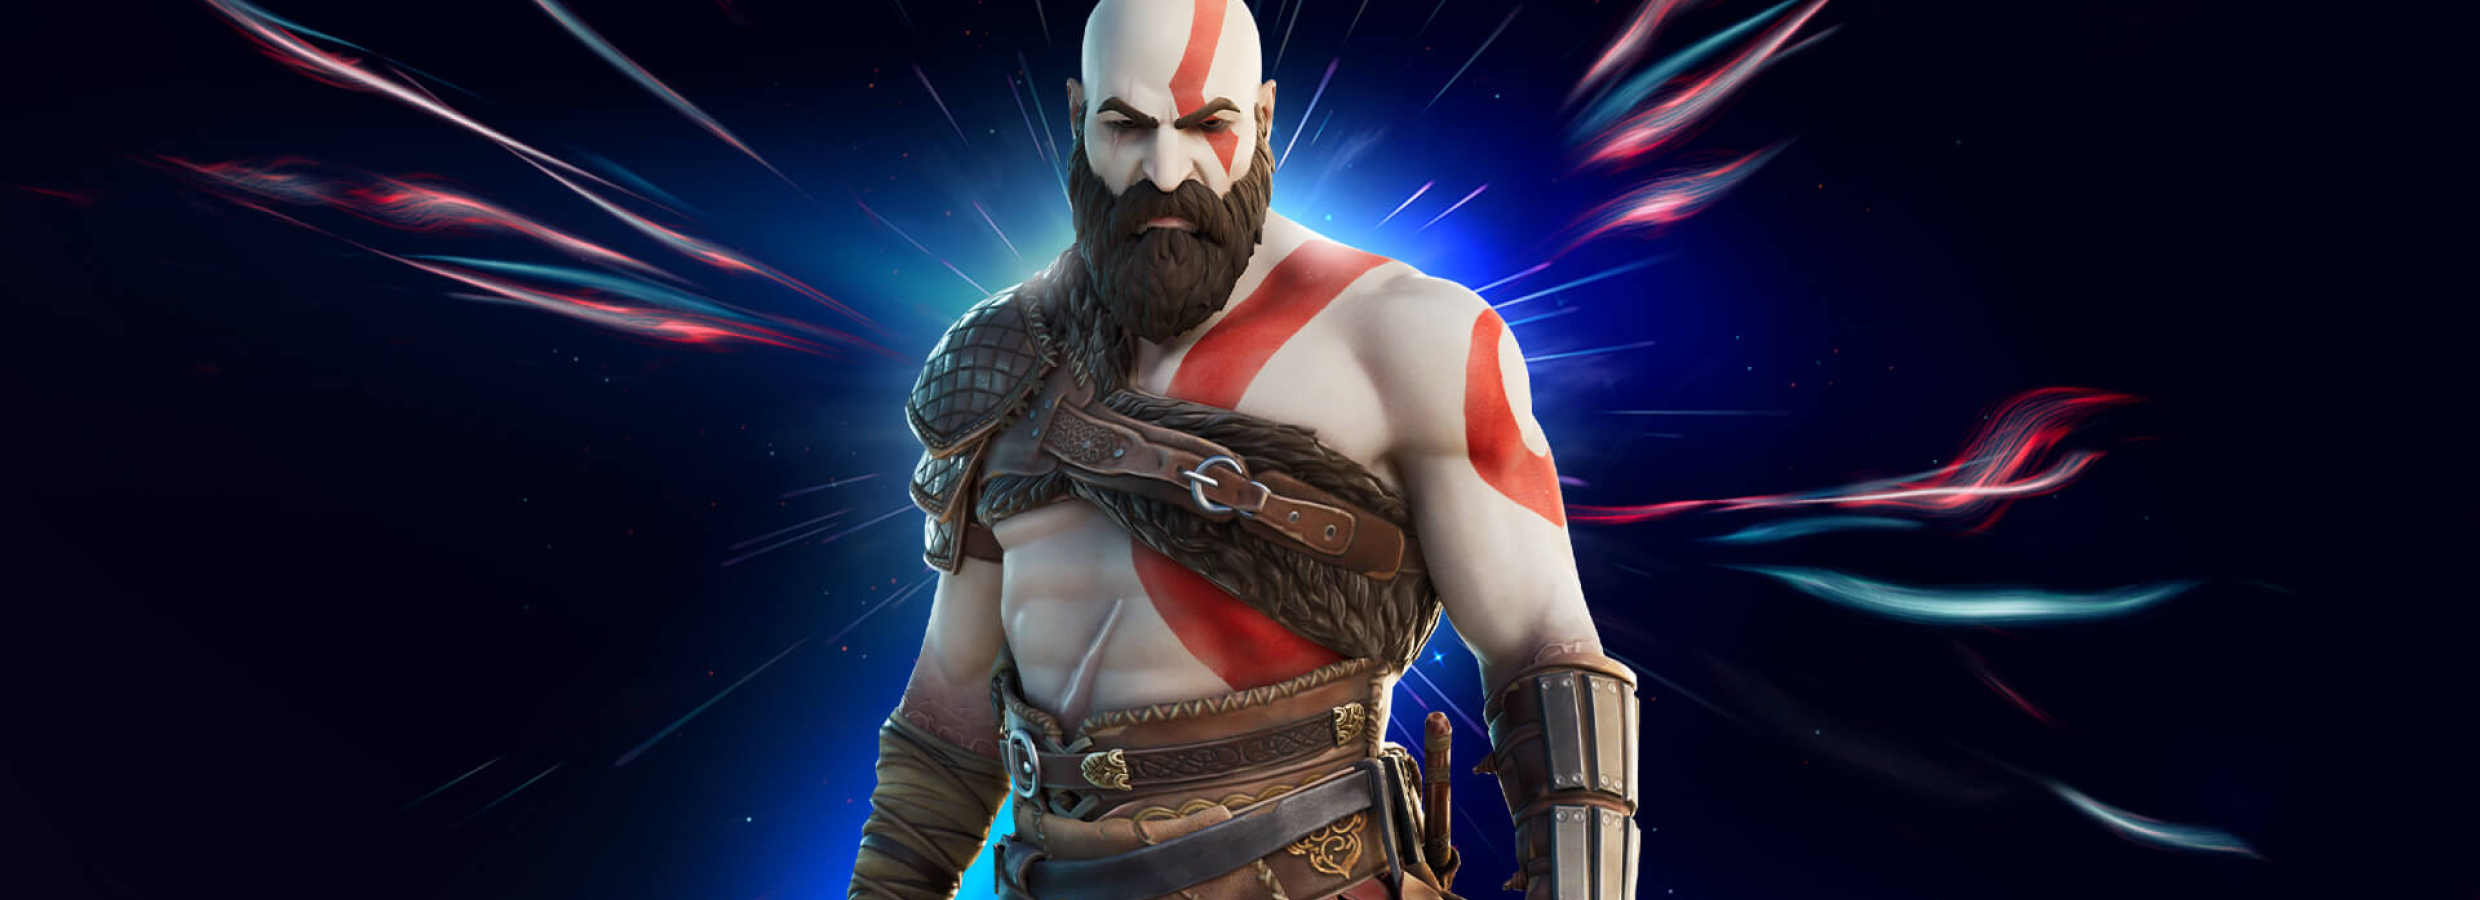 2480x900 Kratos Fortnite x God of War PS5 2480x900 Resolution Wallpaper ...